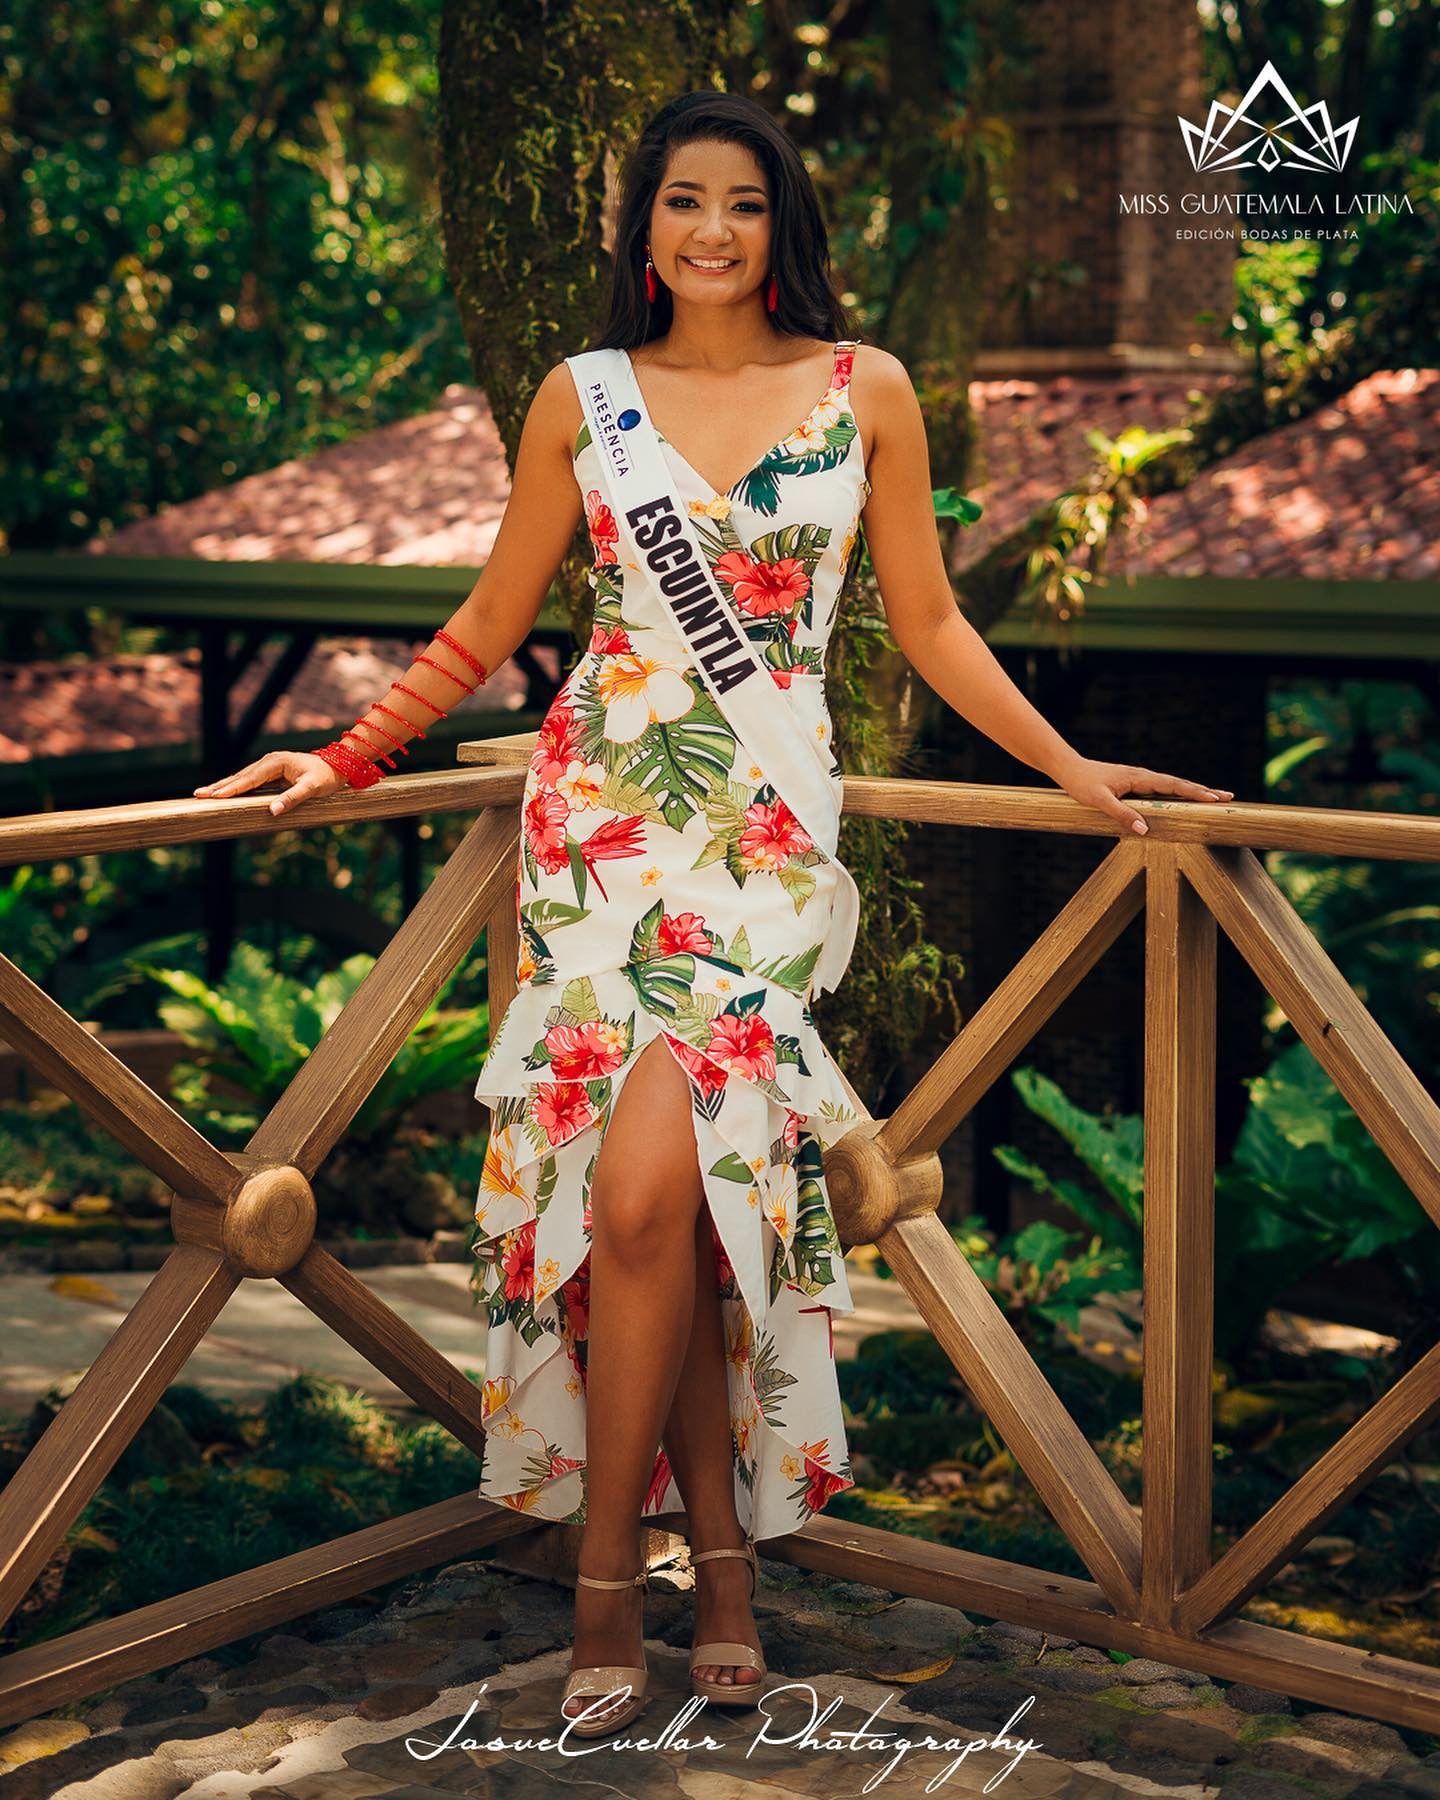 Latina - candidatas a miss guatemala latina 2021. final: 30 de abril. - Página 8 BFjtDb